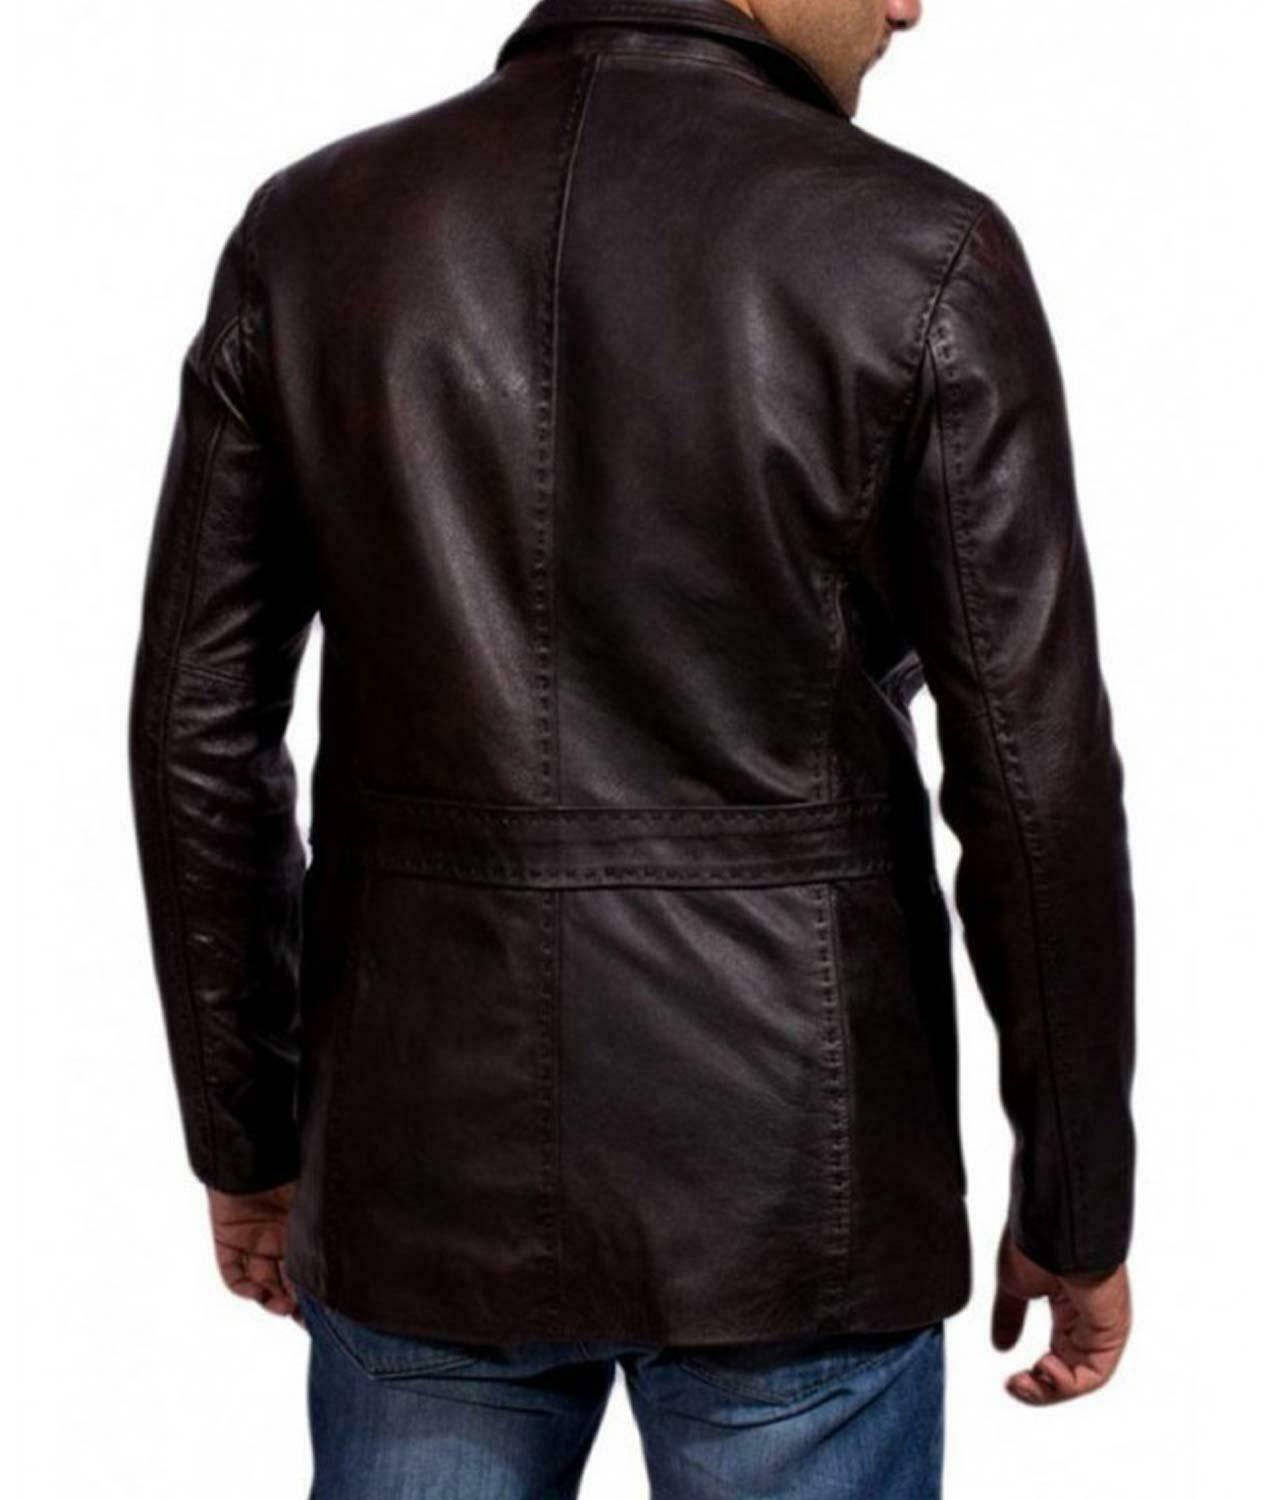 Spine Spark Men Jason Statham Wild Card Black Leather Blazer Coat